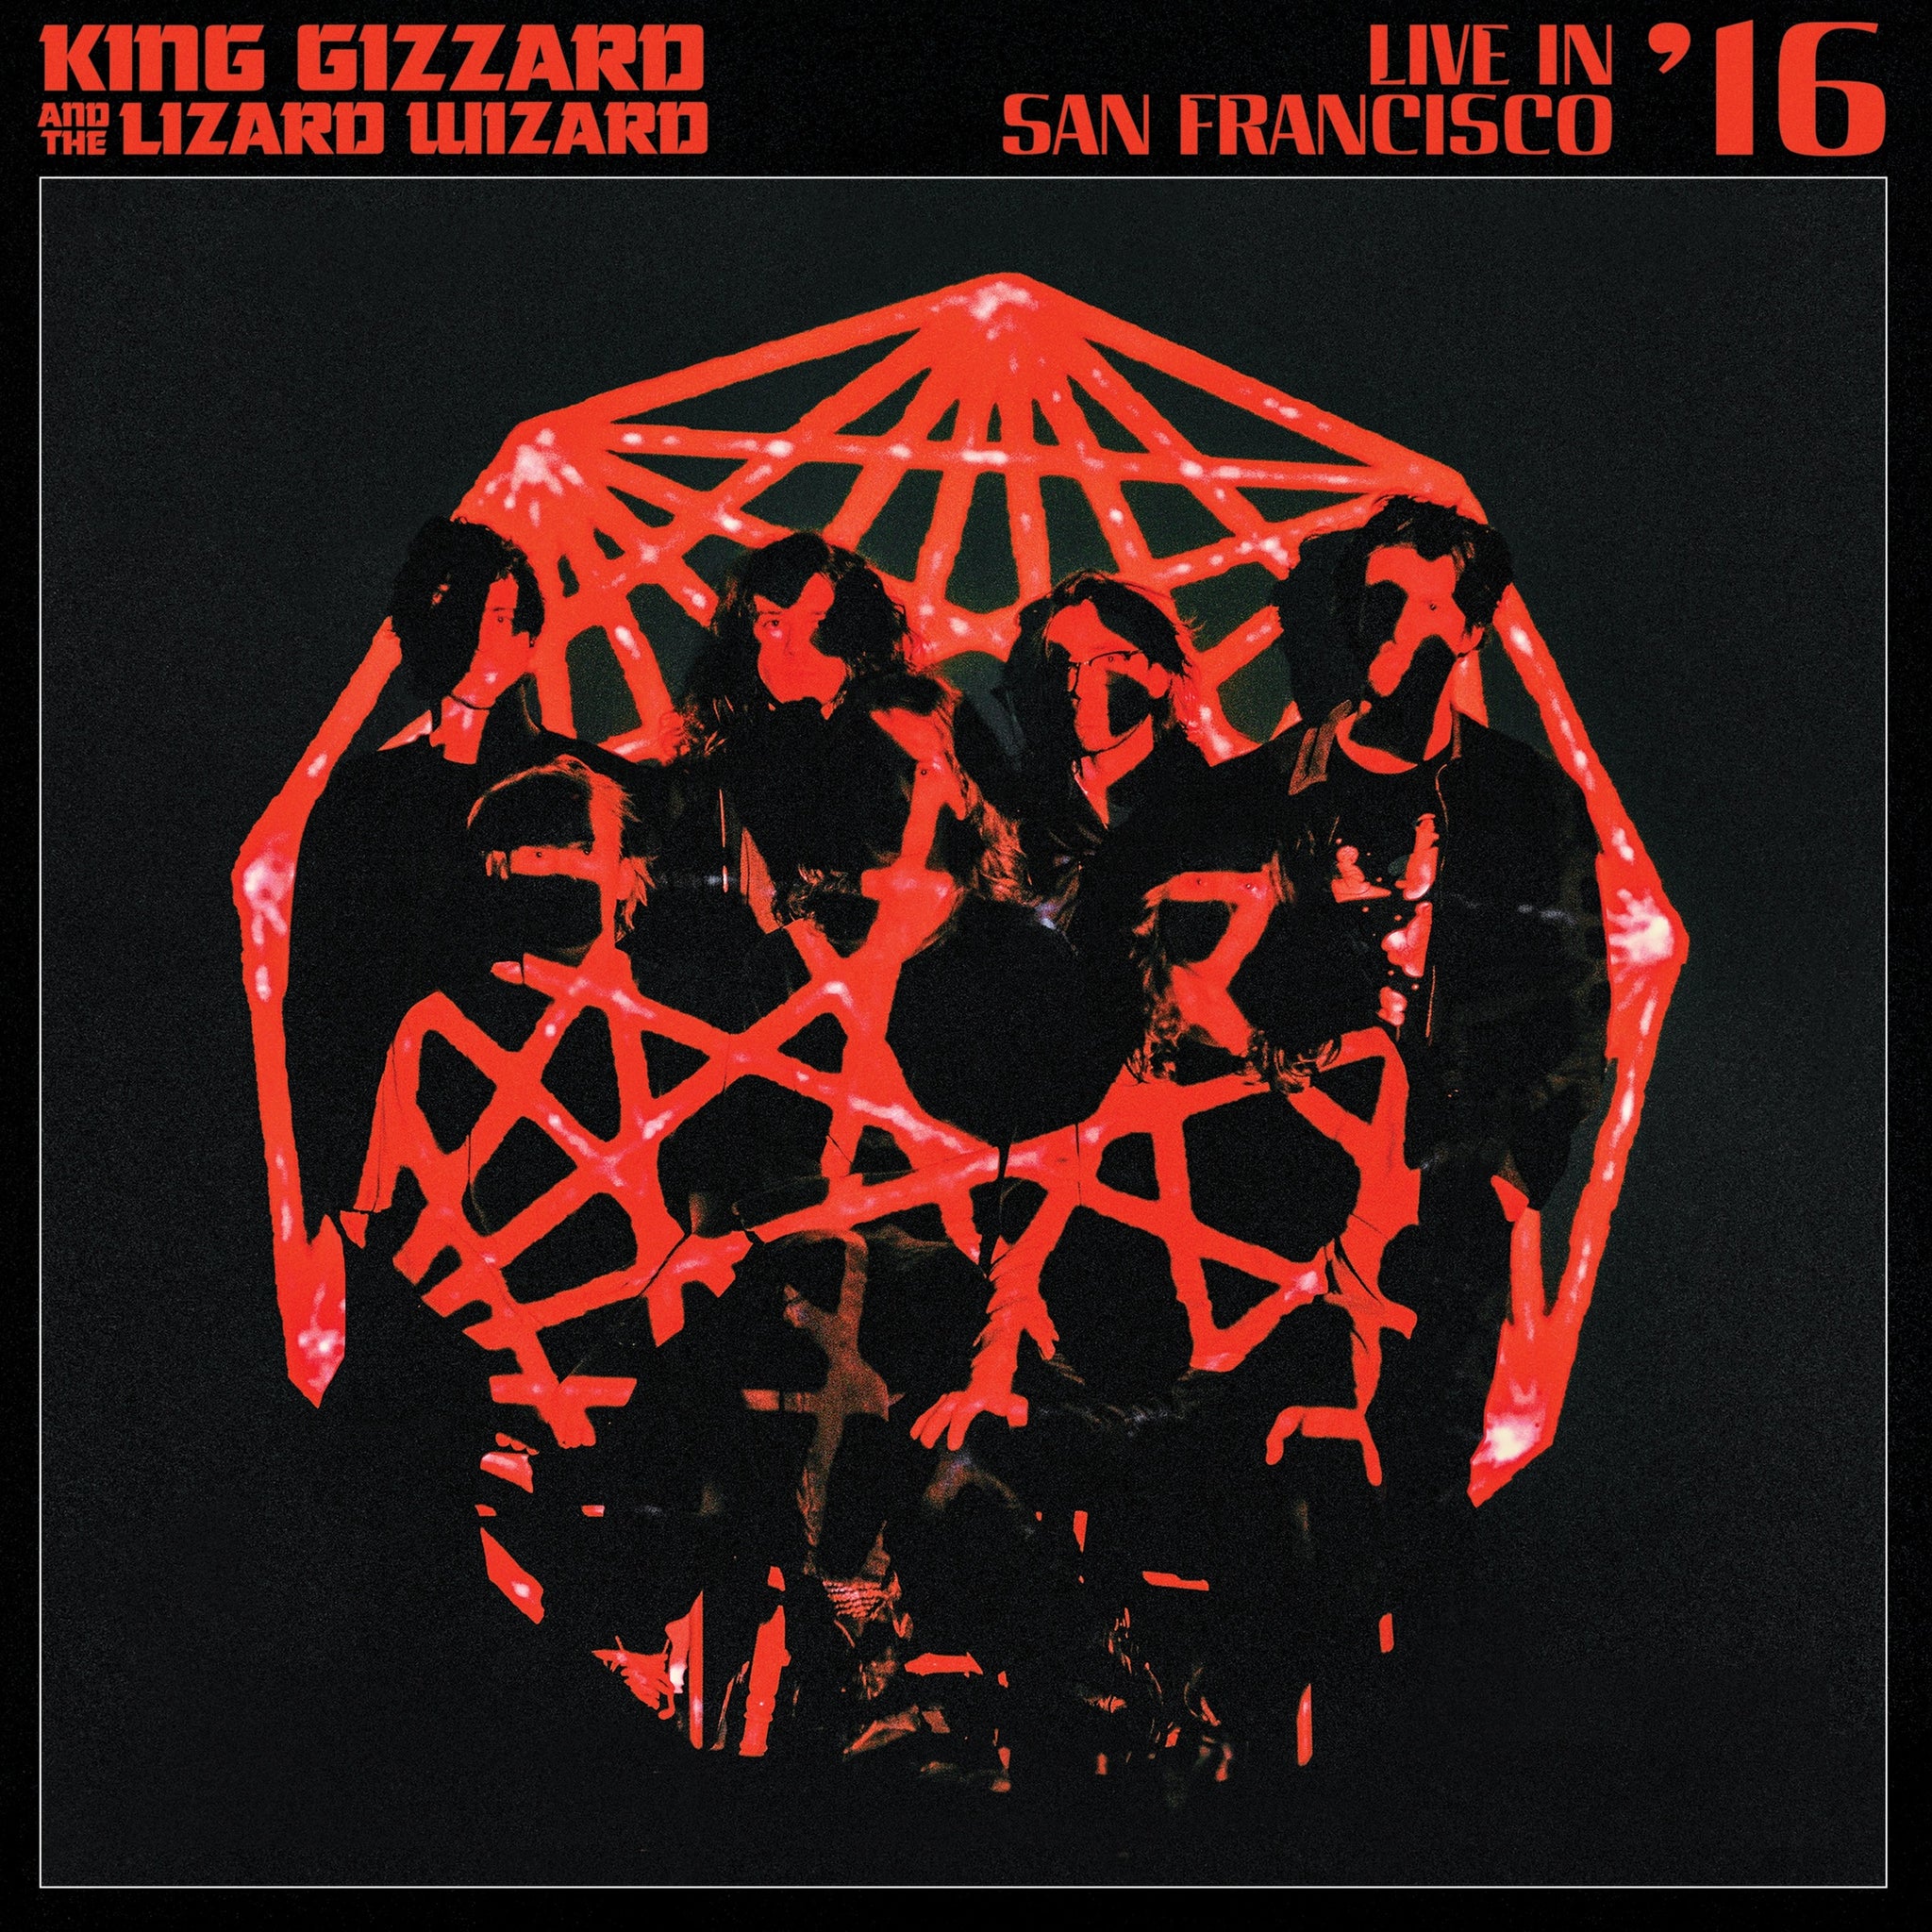 King Gizzard & The Lizard Wizard - Live in San Francisco '16